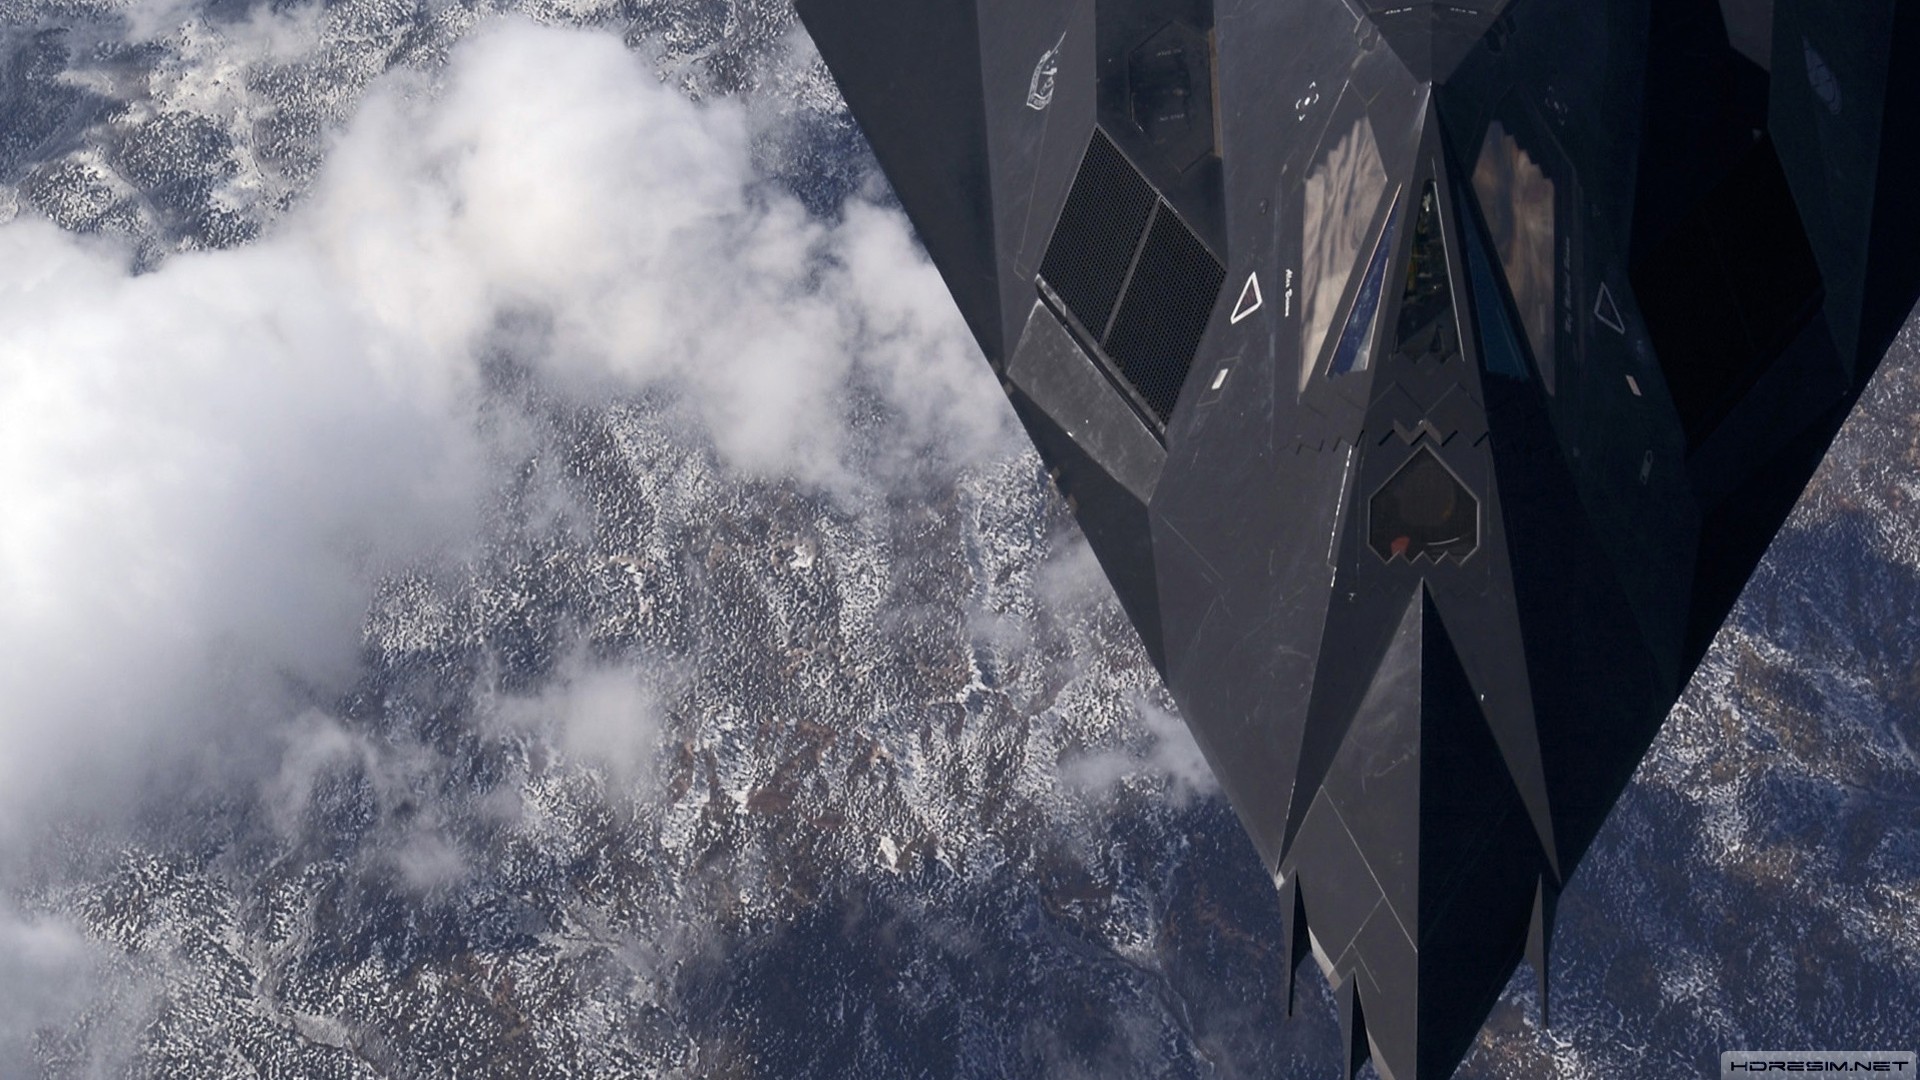 lockheed,f-117,askeri taşıt,nighthawk